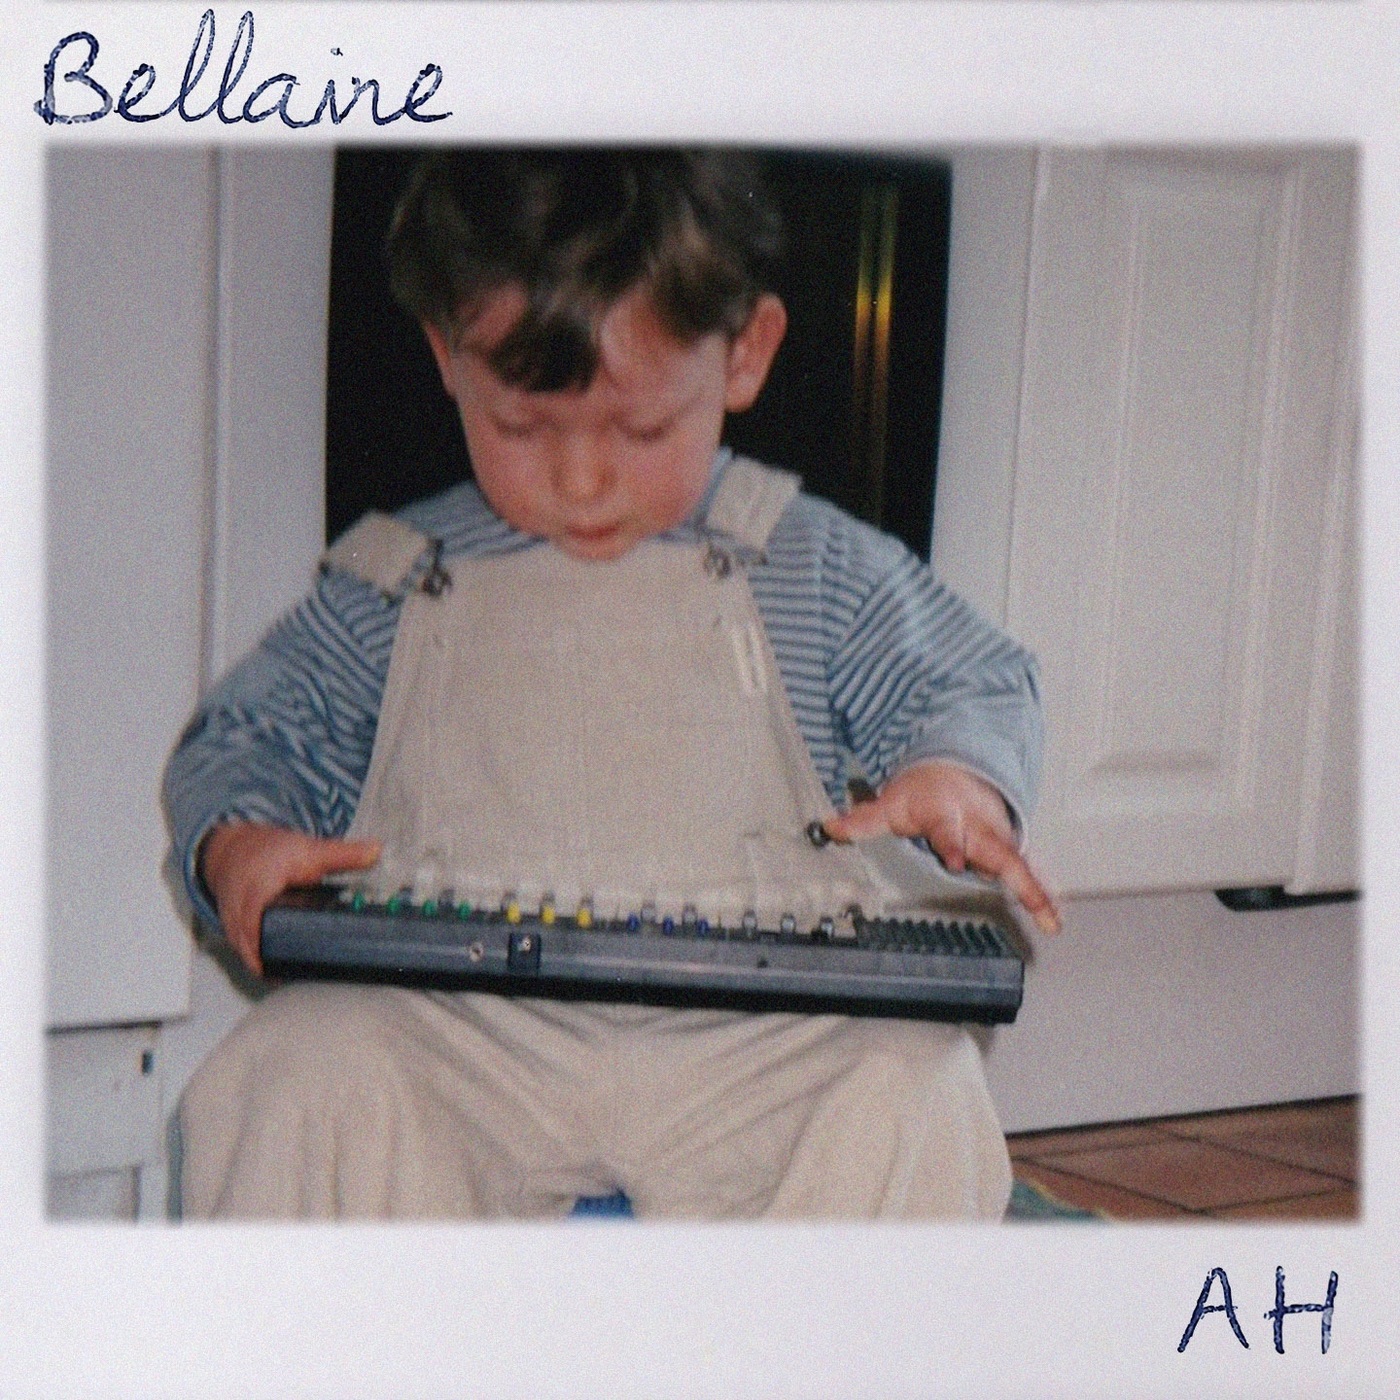 Bellaire - "Ah" / AOC Records